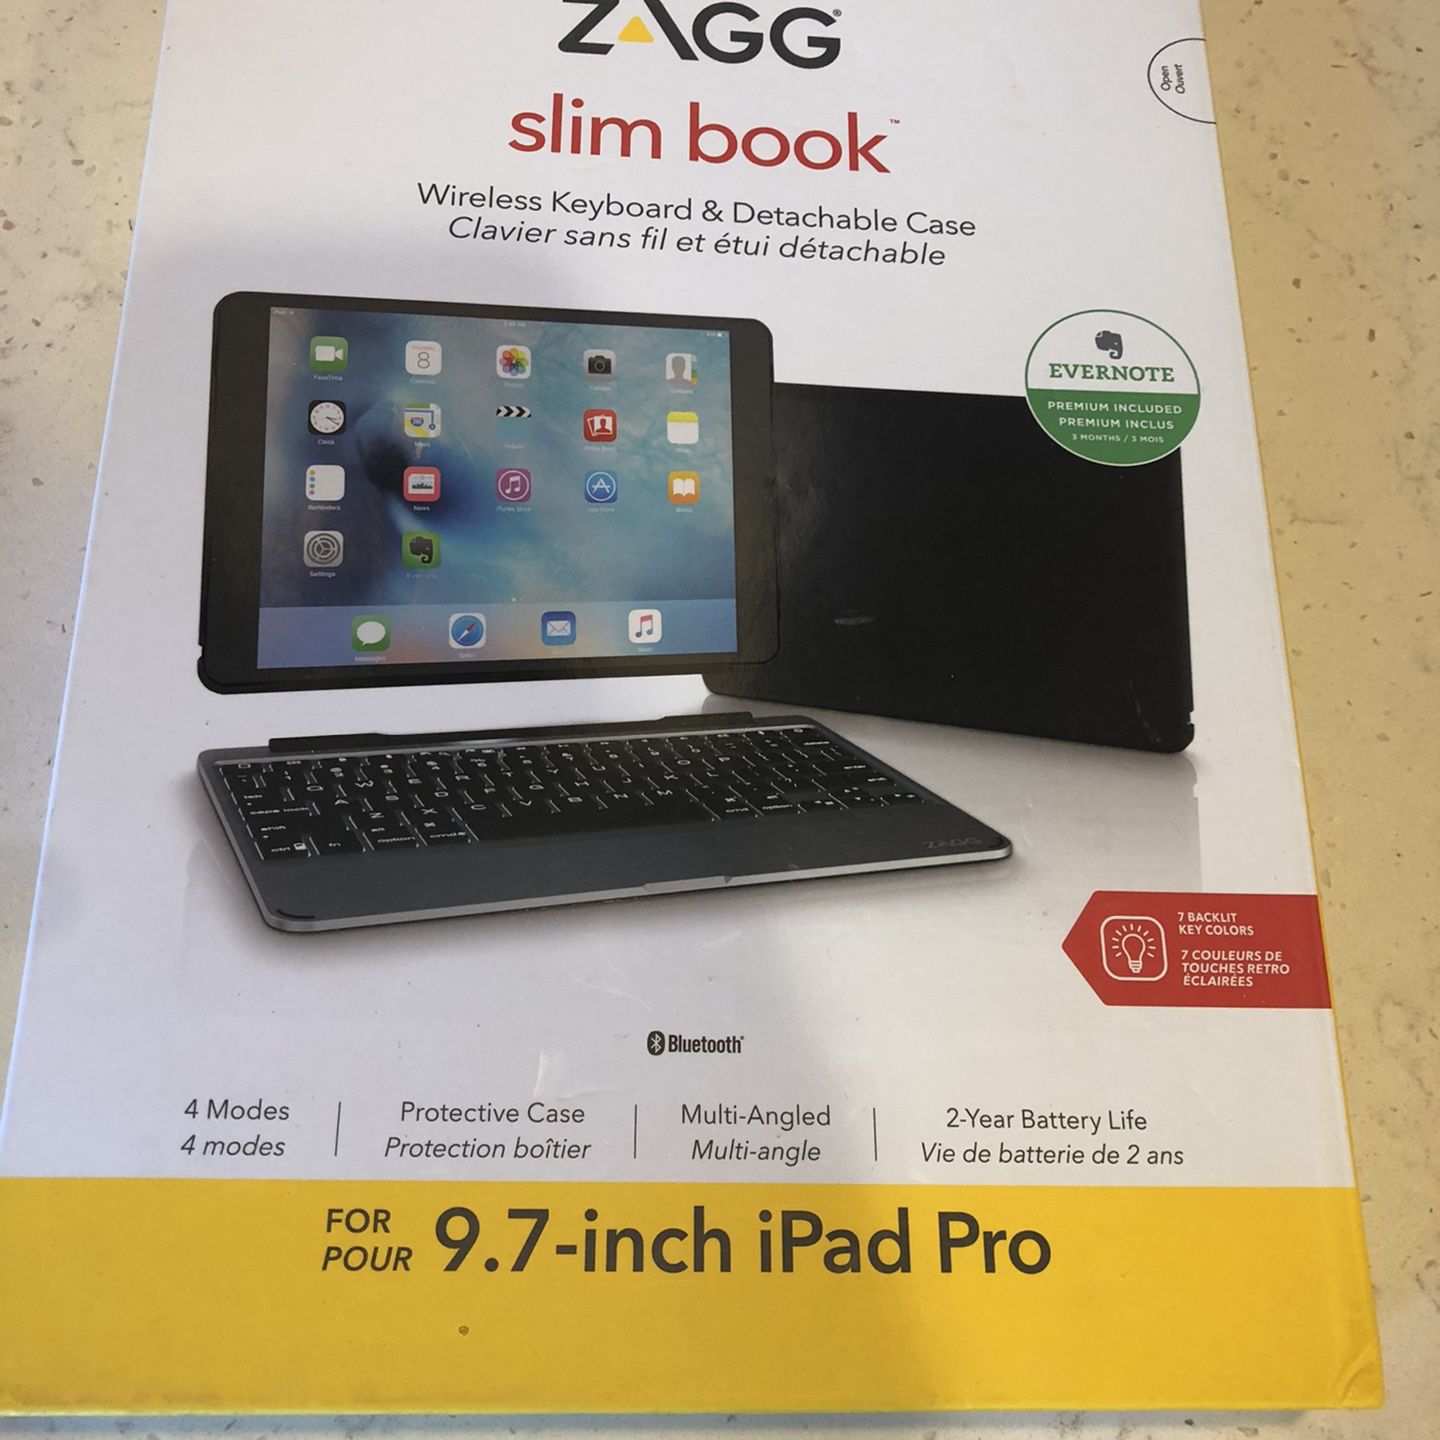 Zag Slim Book 9.7-inch iPad Pro Wireless Keyboard (NEW)